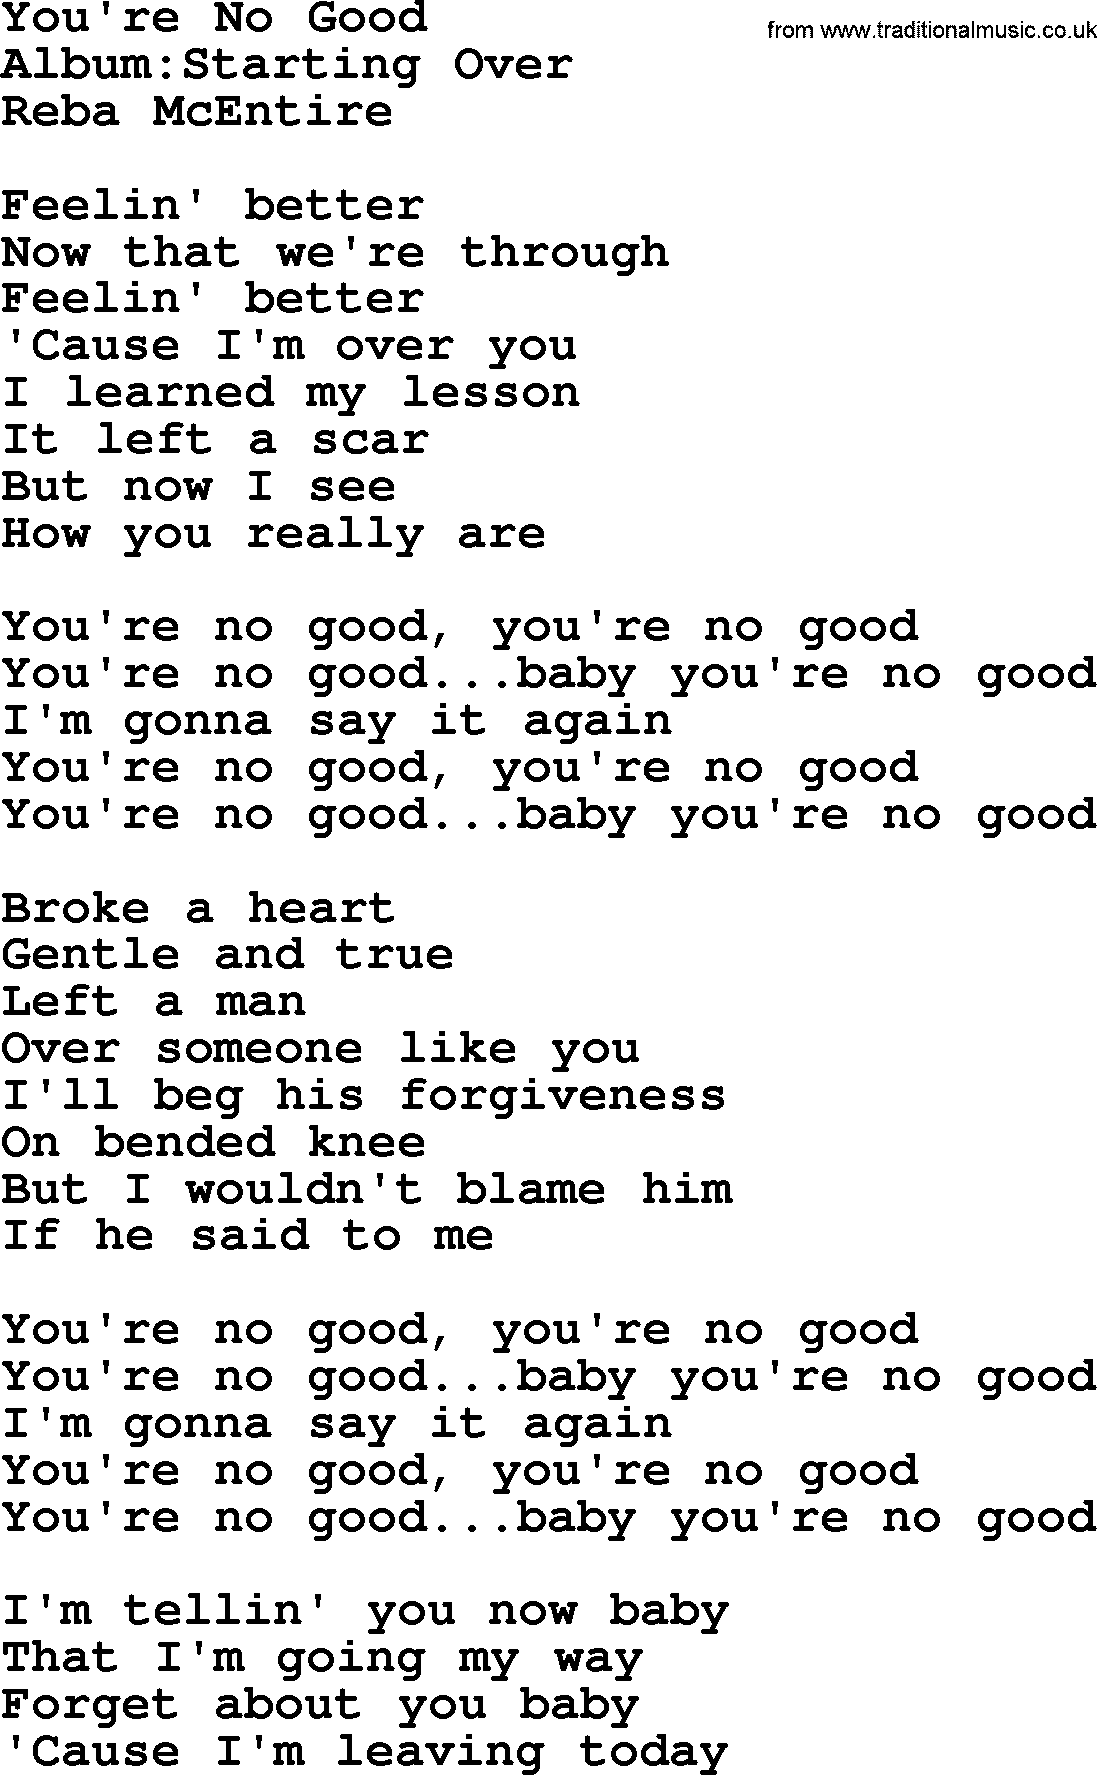 Reba McEntire song: You're No Good lyrics